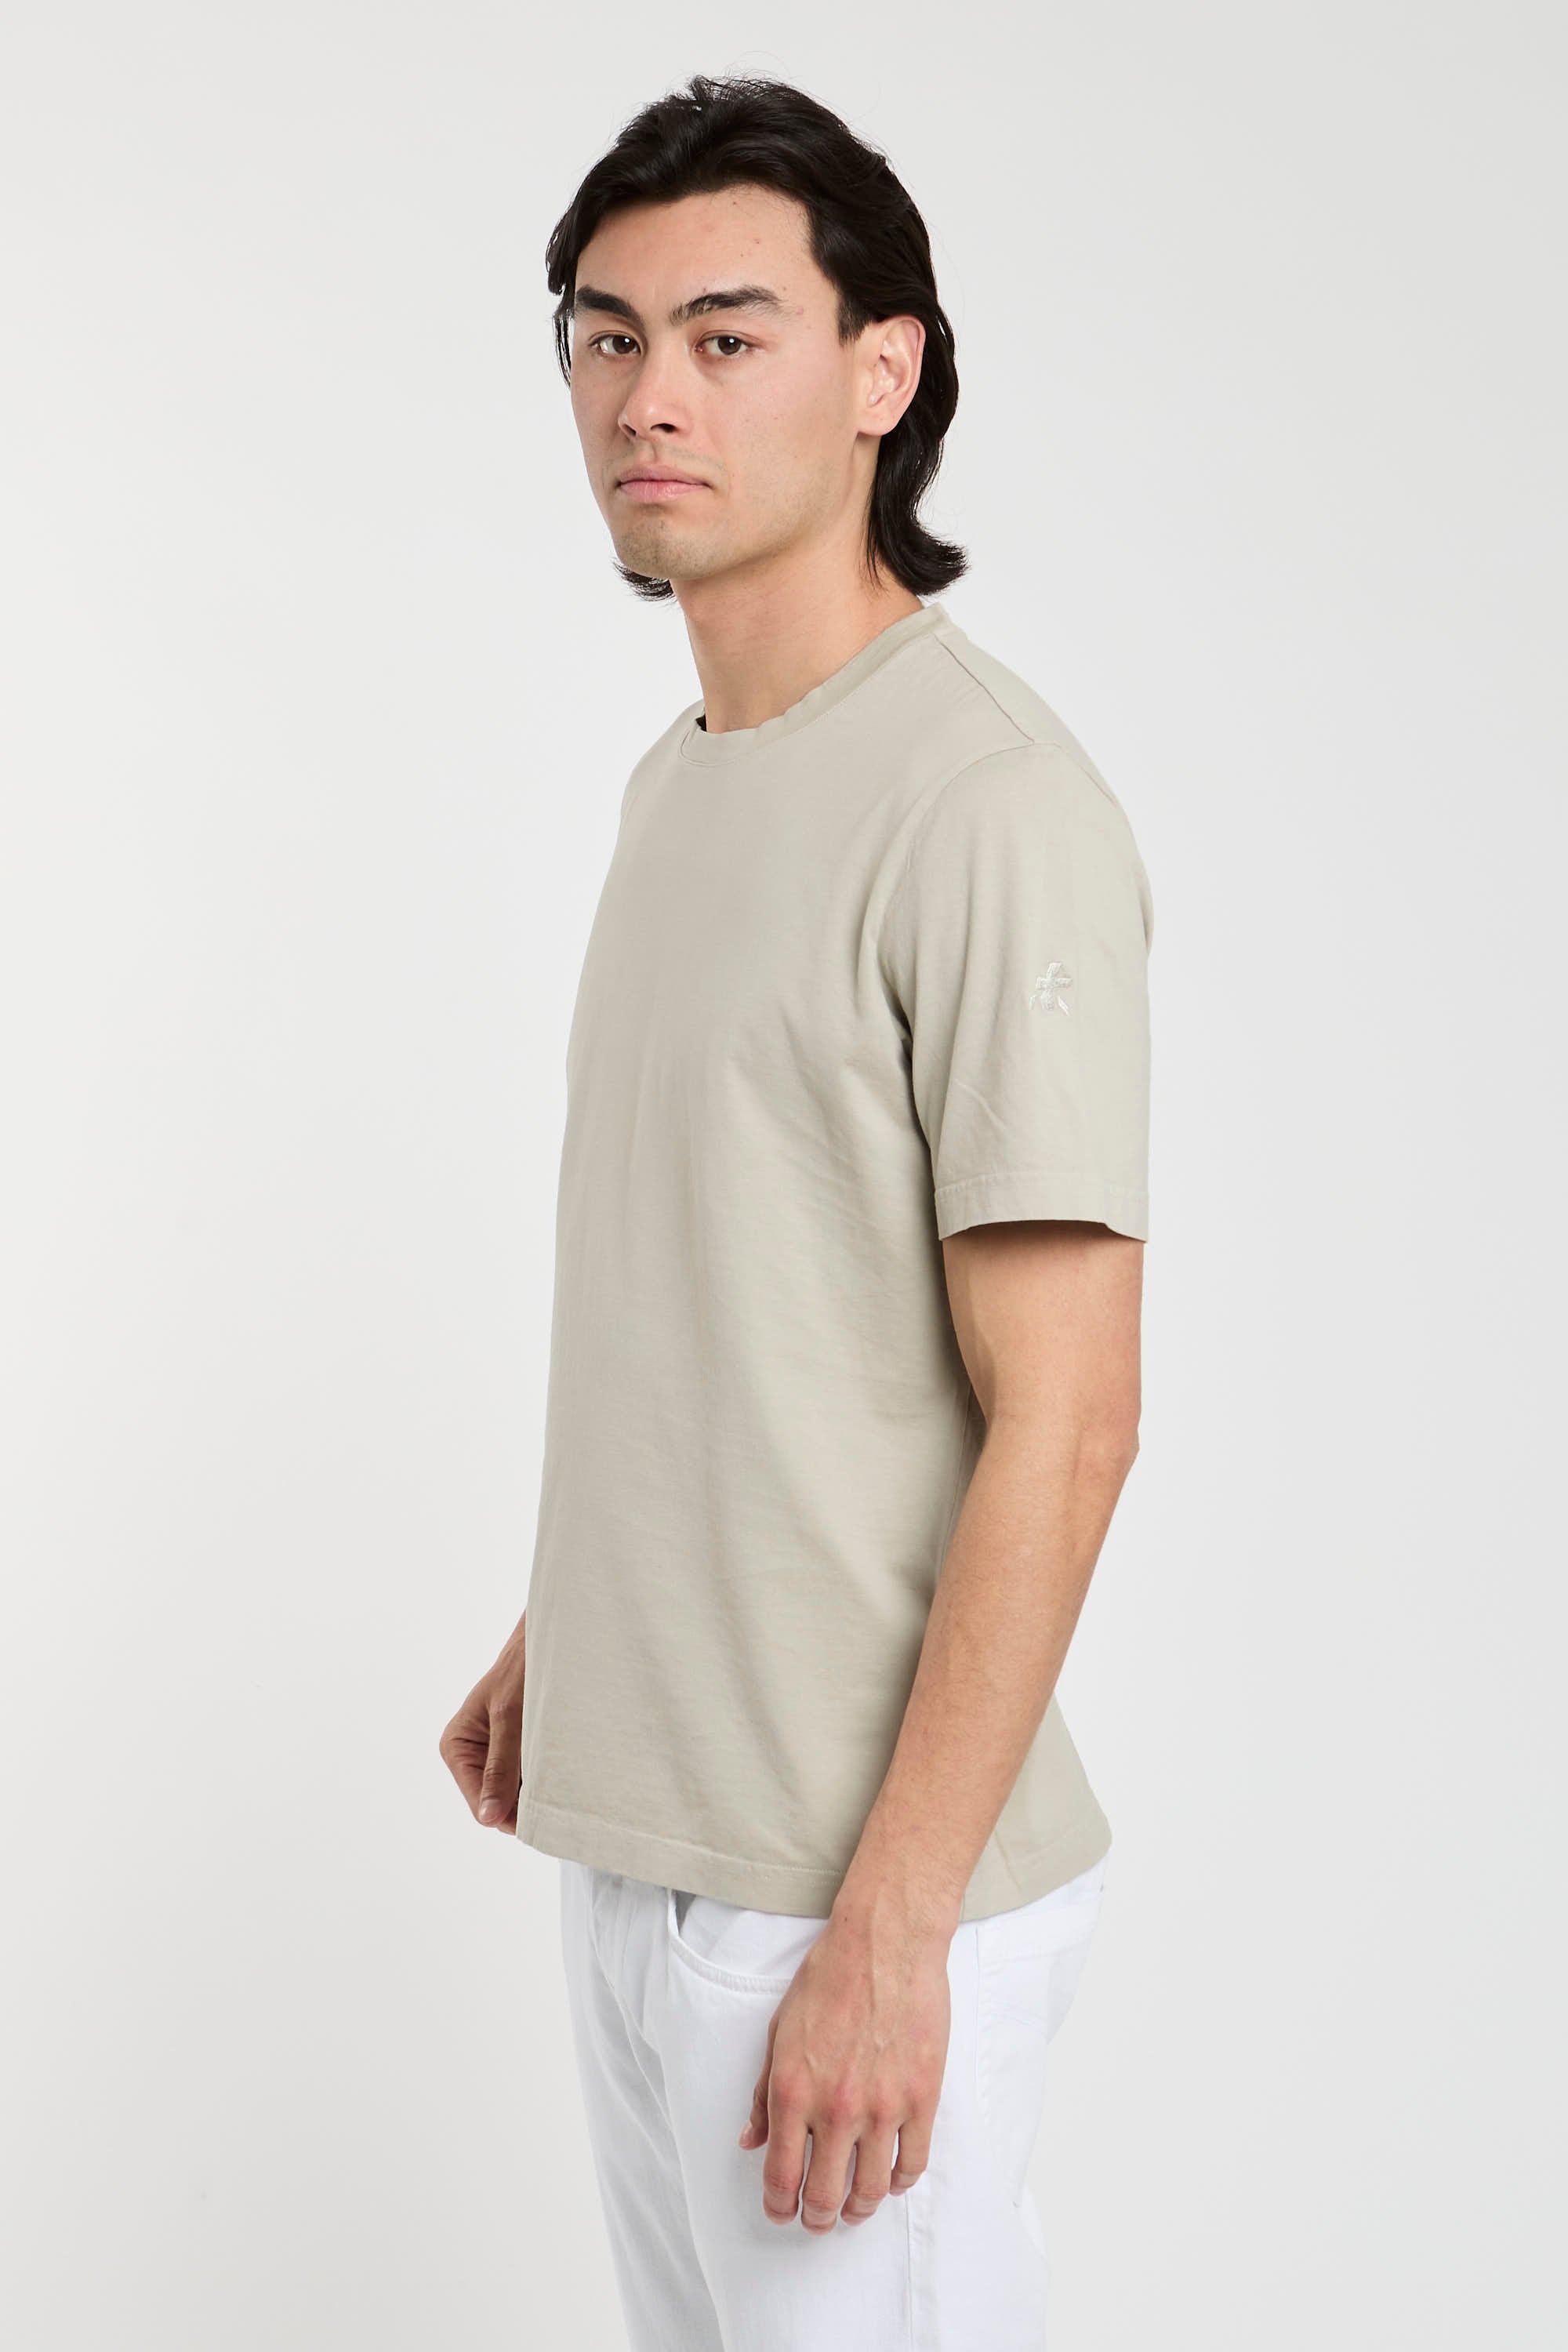 Premiata Cotton Jersey T-Shirt in Sand-6